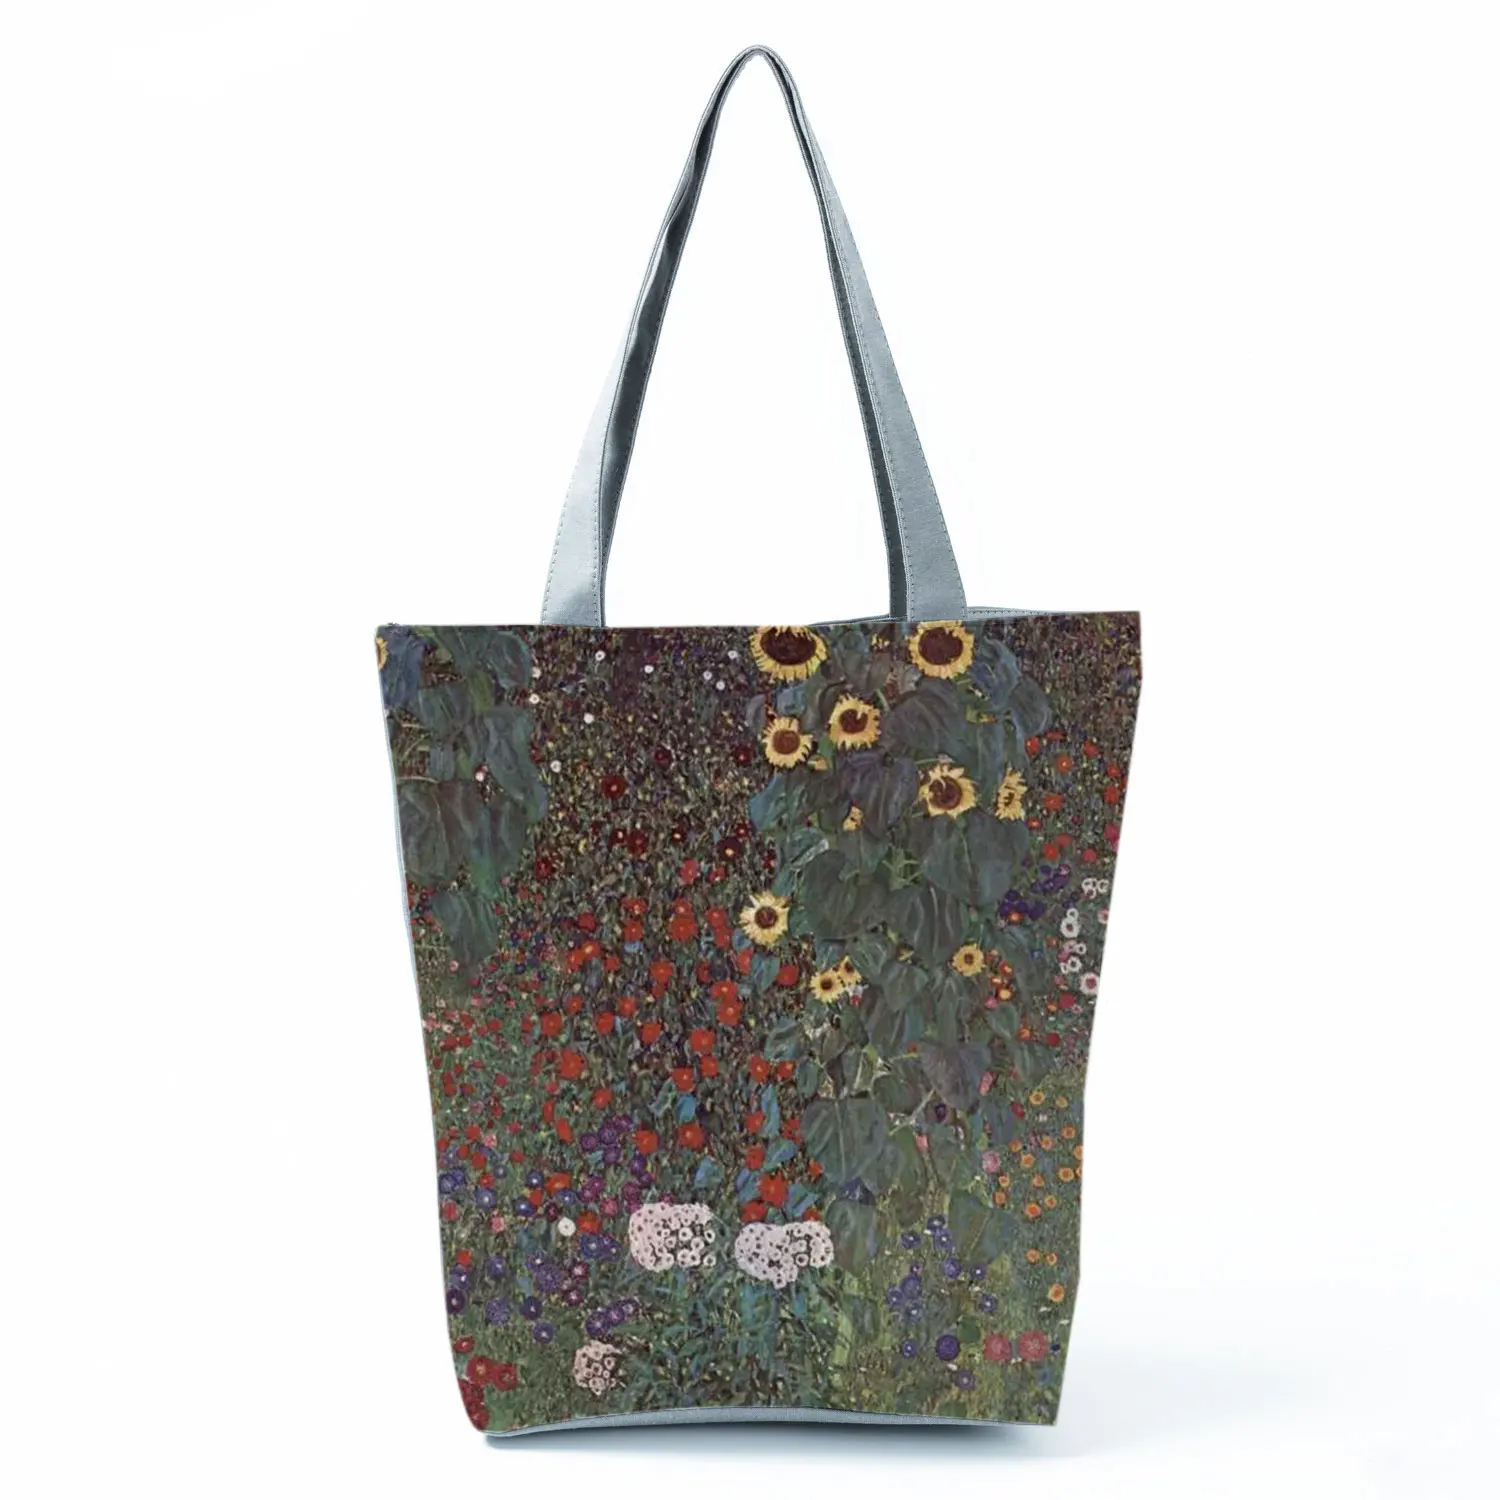 New Van Gogh Oil Painting Tote Bag Retro Art Fashion Travel Bag Women Casual Eco Shopping High Quality Foldable Shoulder Handbag 